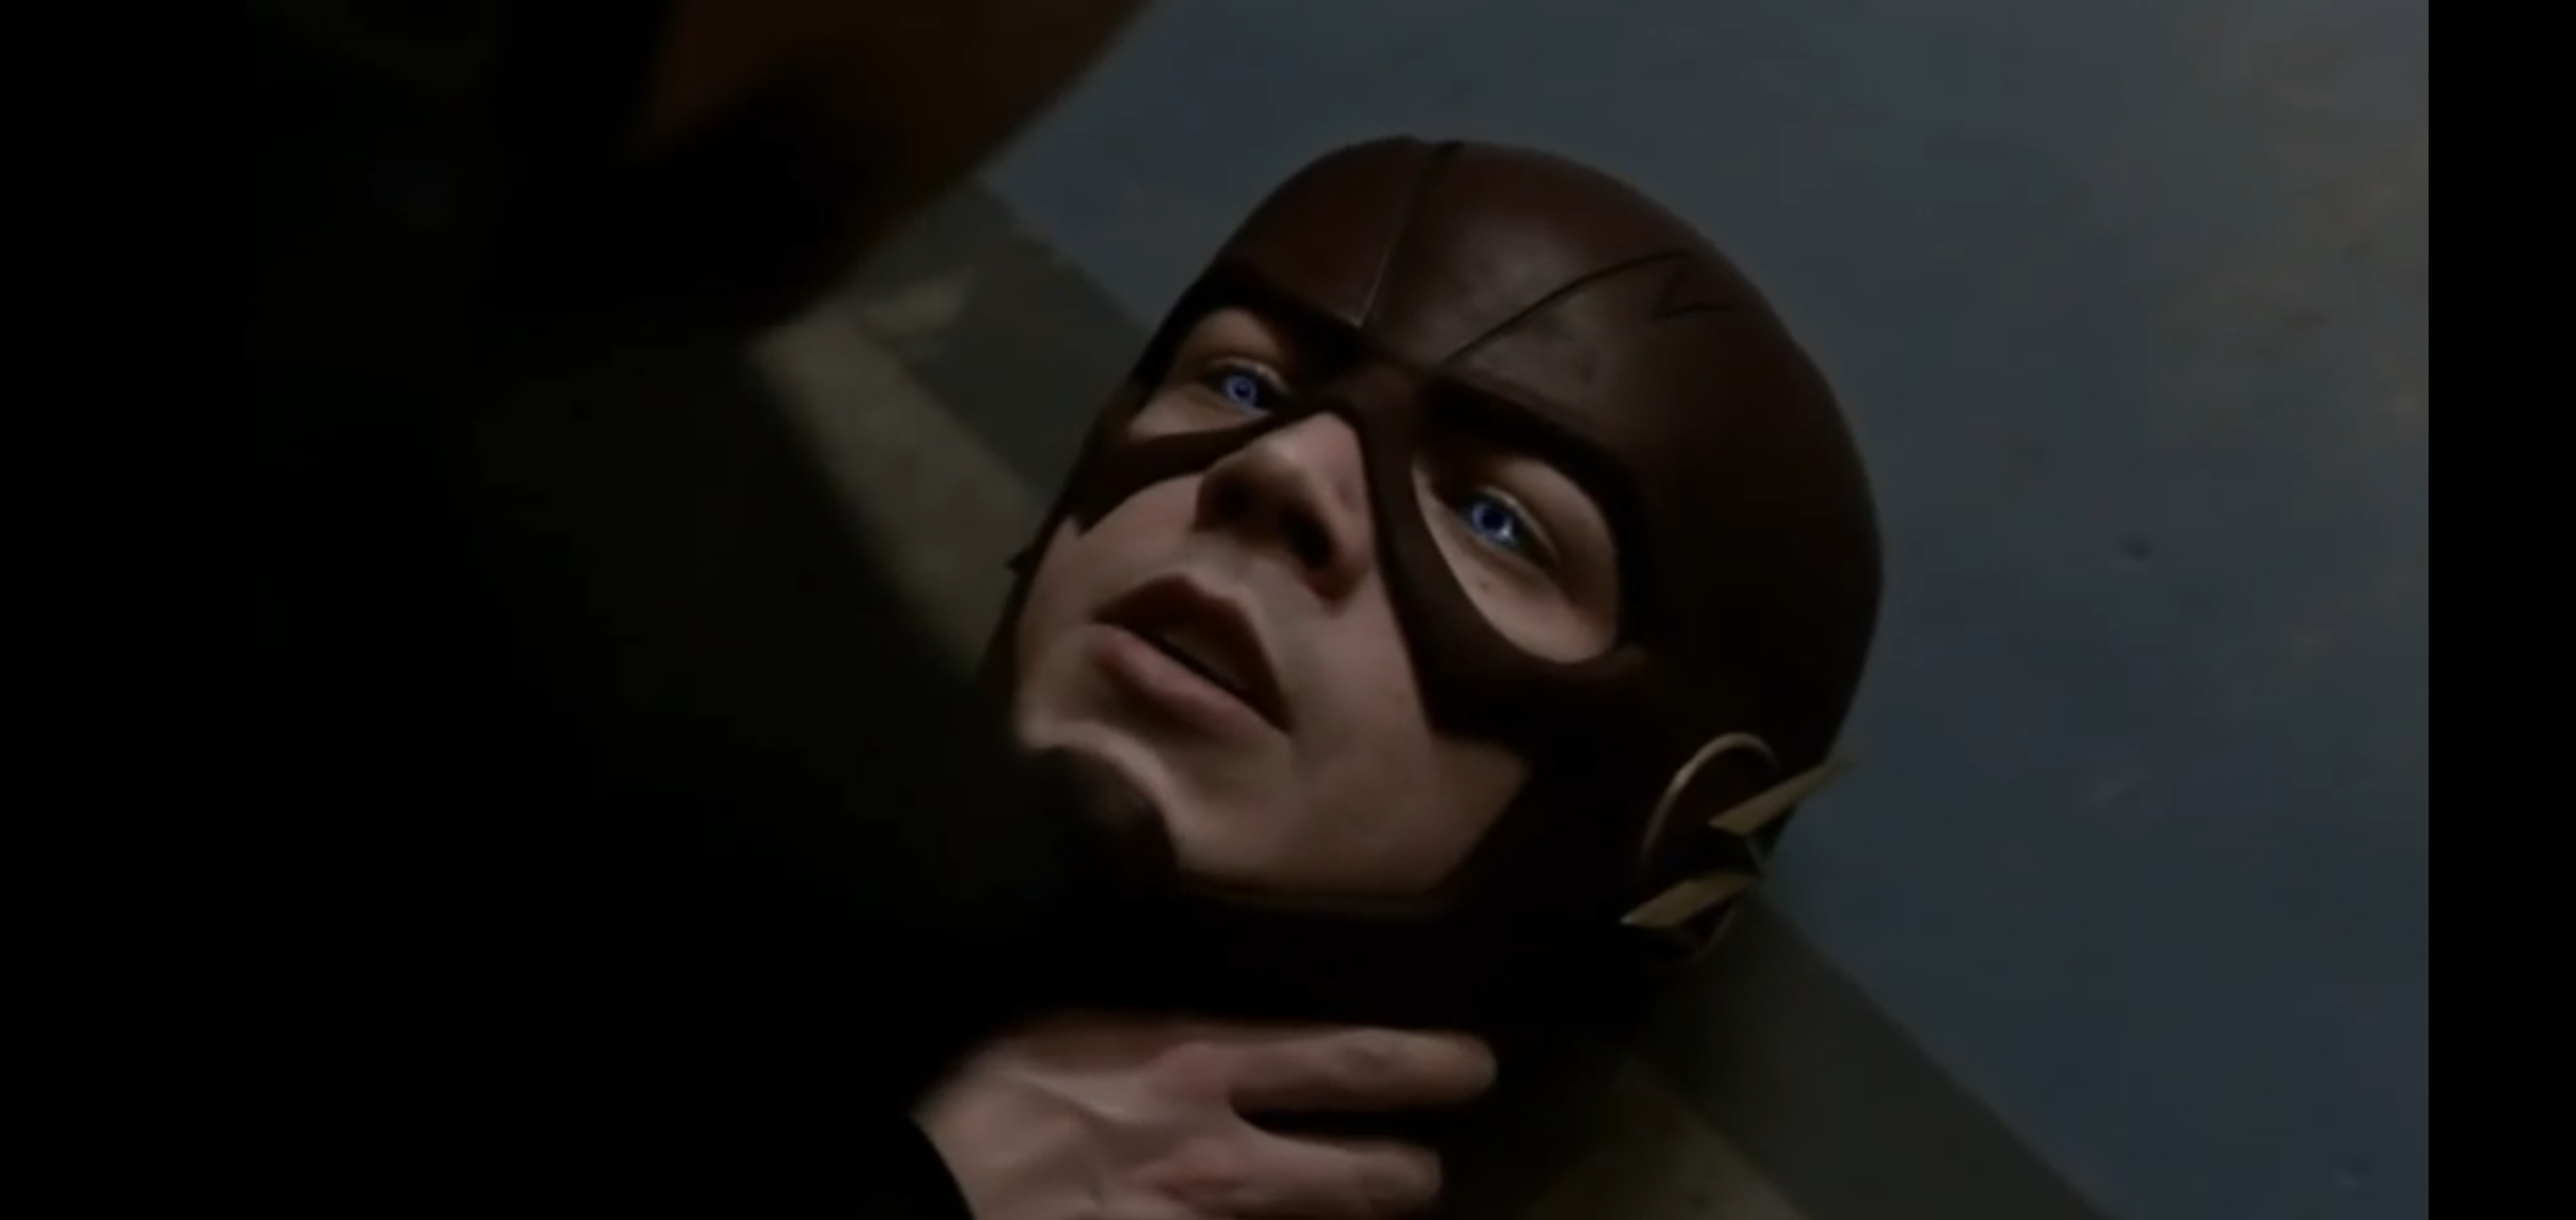 The Flash is Hypnotized - ThisVid.com